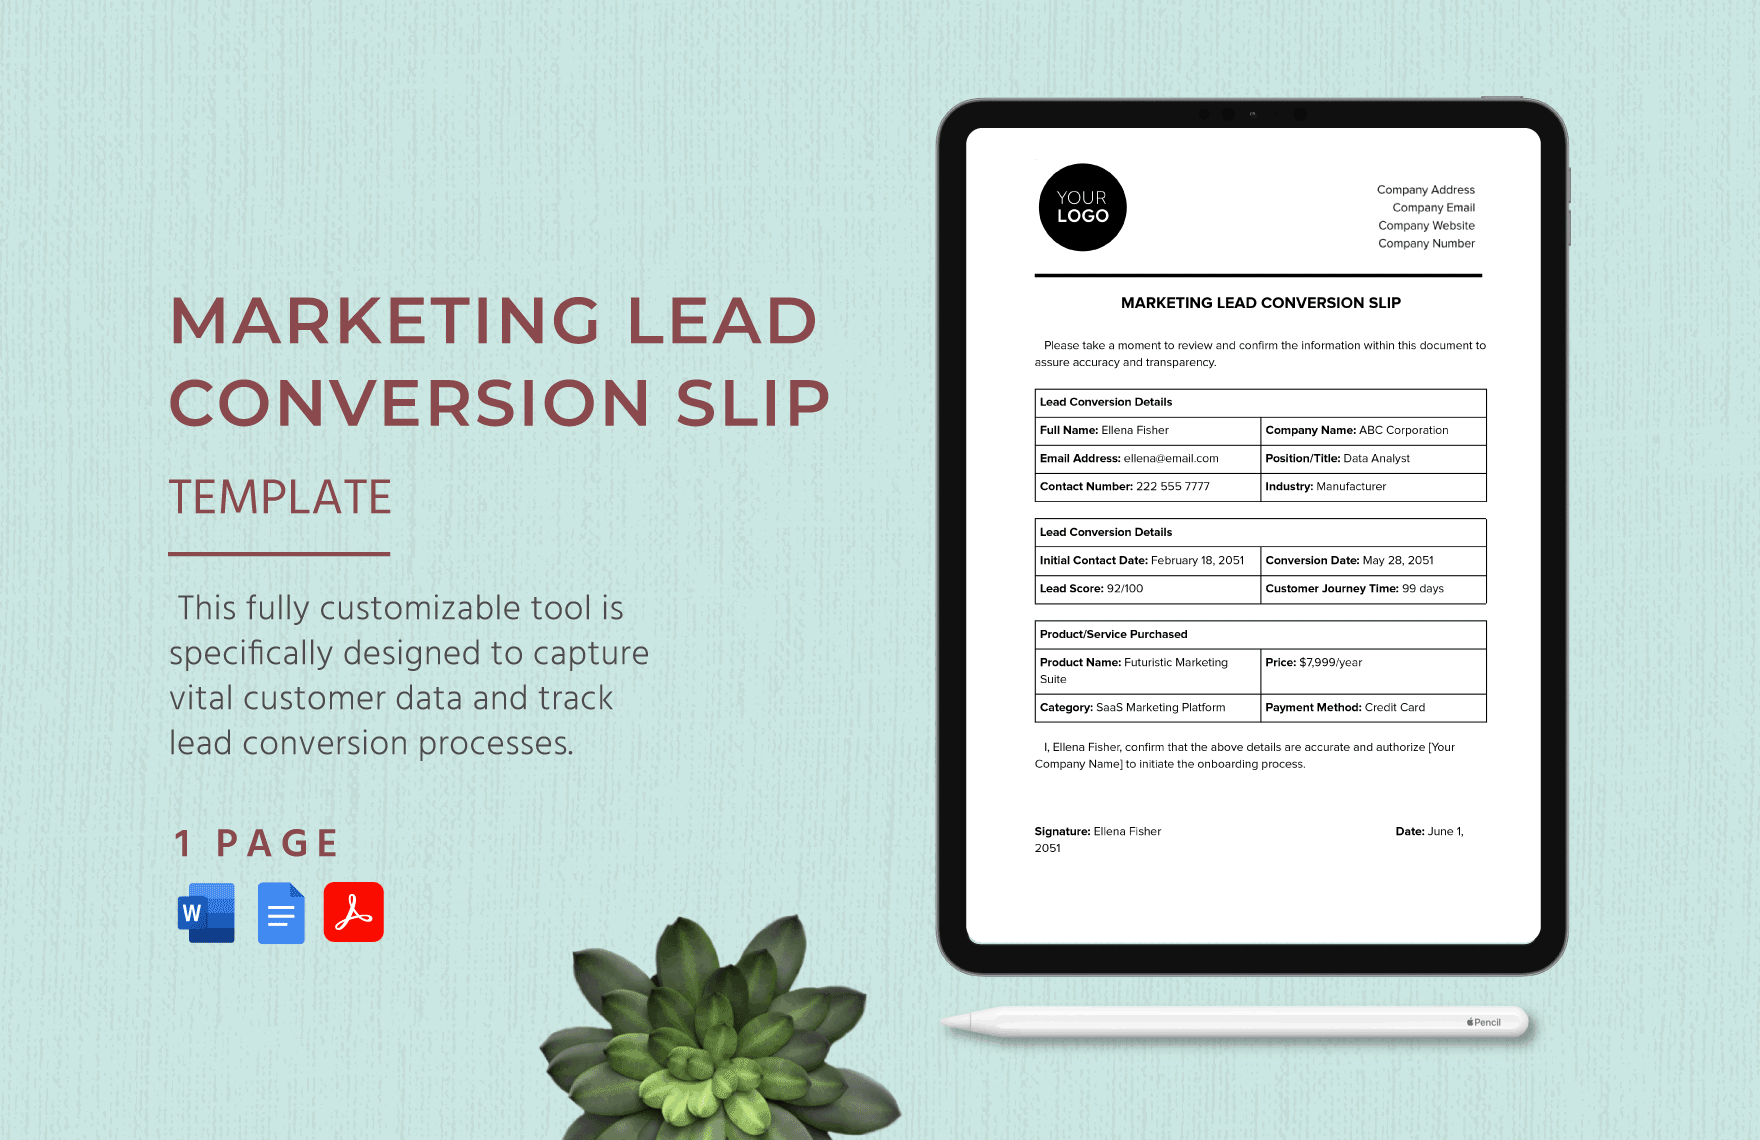 Marketing Lead Conversion Slip Template in Word, Google Docs, PDF